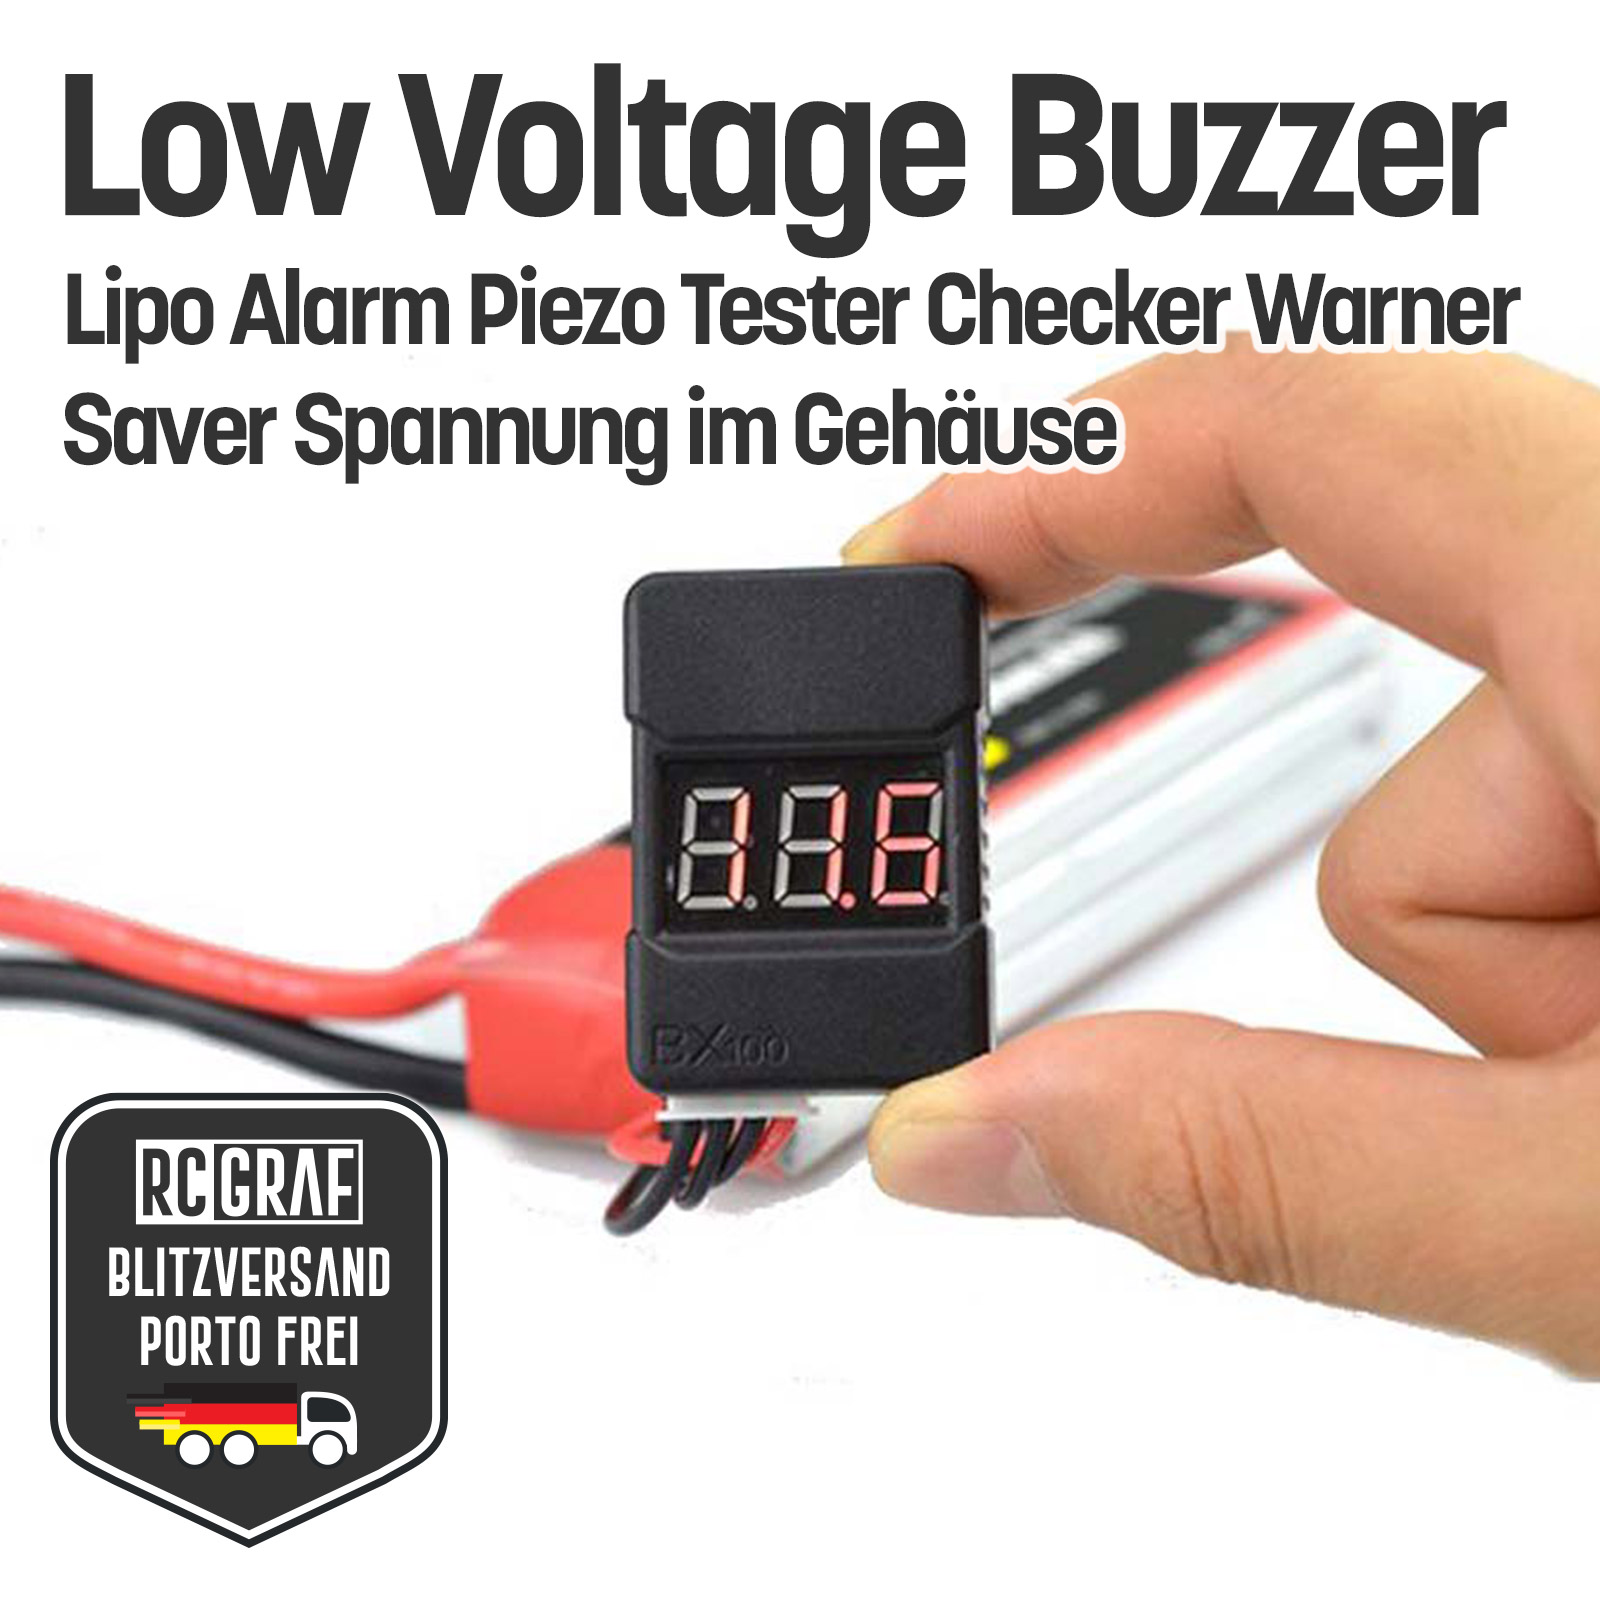 Low Voltage Buzzer Lipo Alarm Piezo Tester Checker Warner Saver Spannung Gehäuse 2